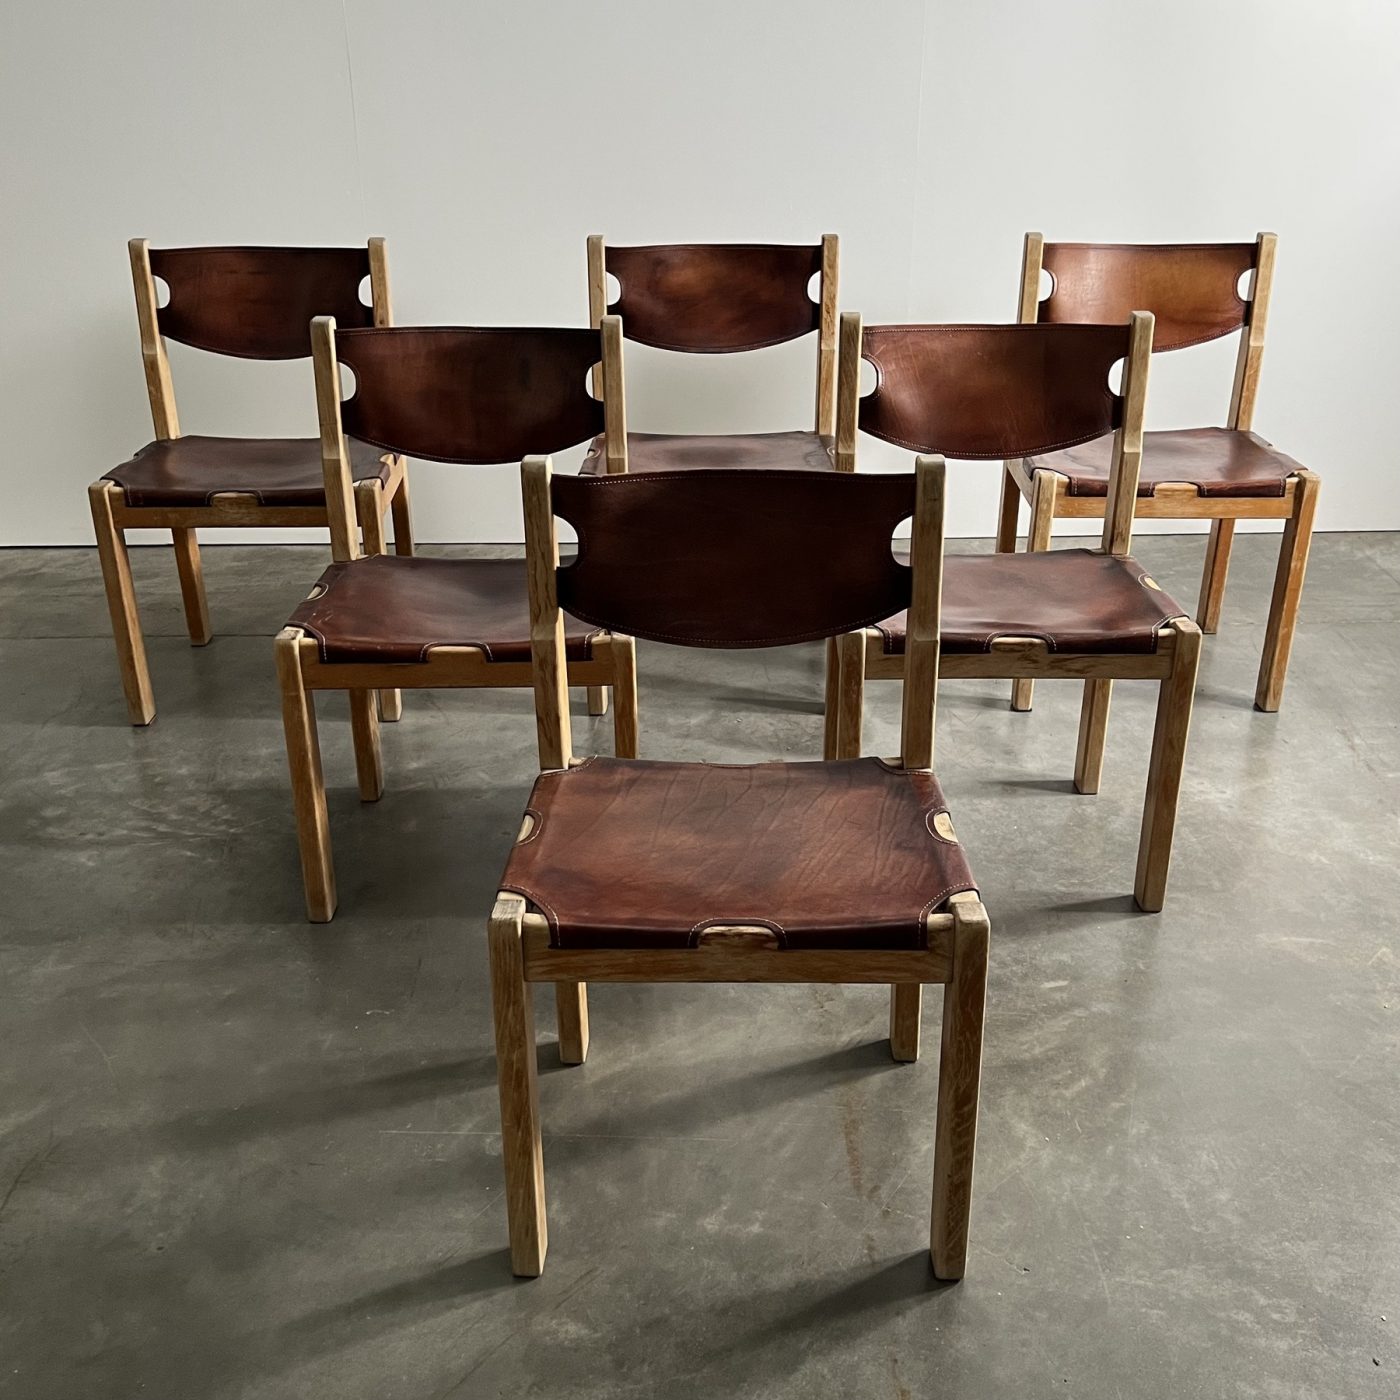 objet-vagabond-leather-chairs0009